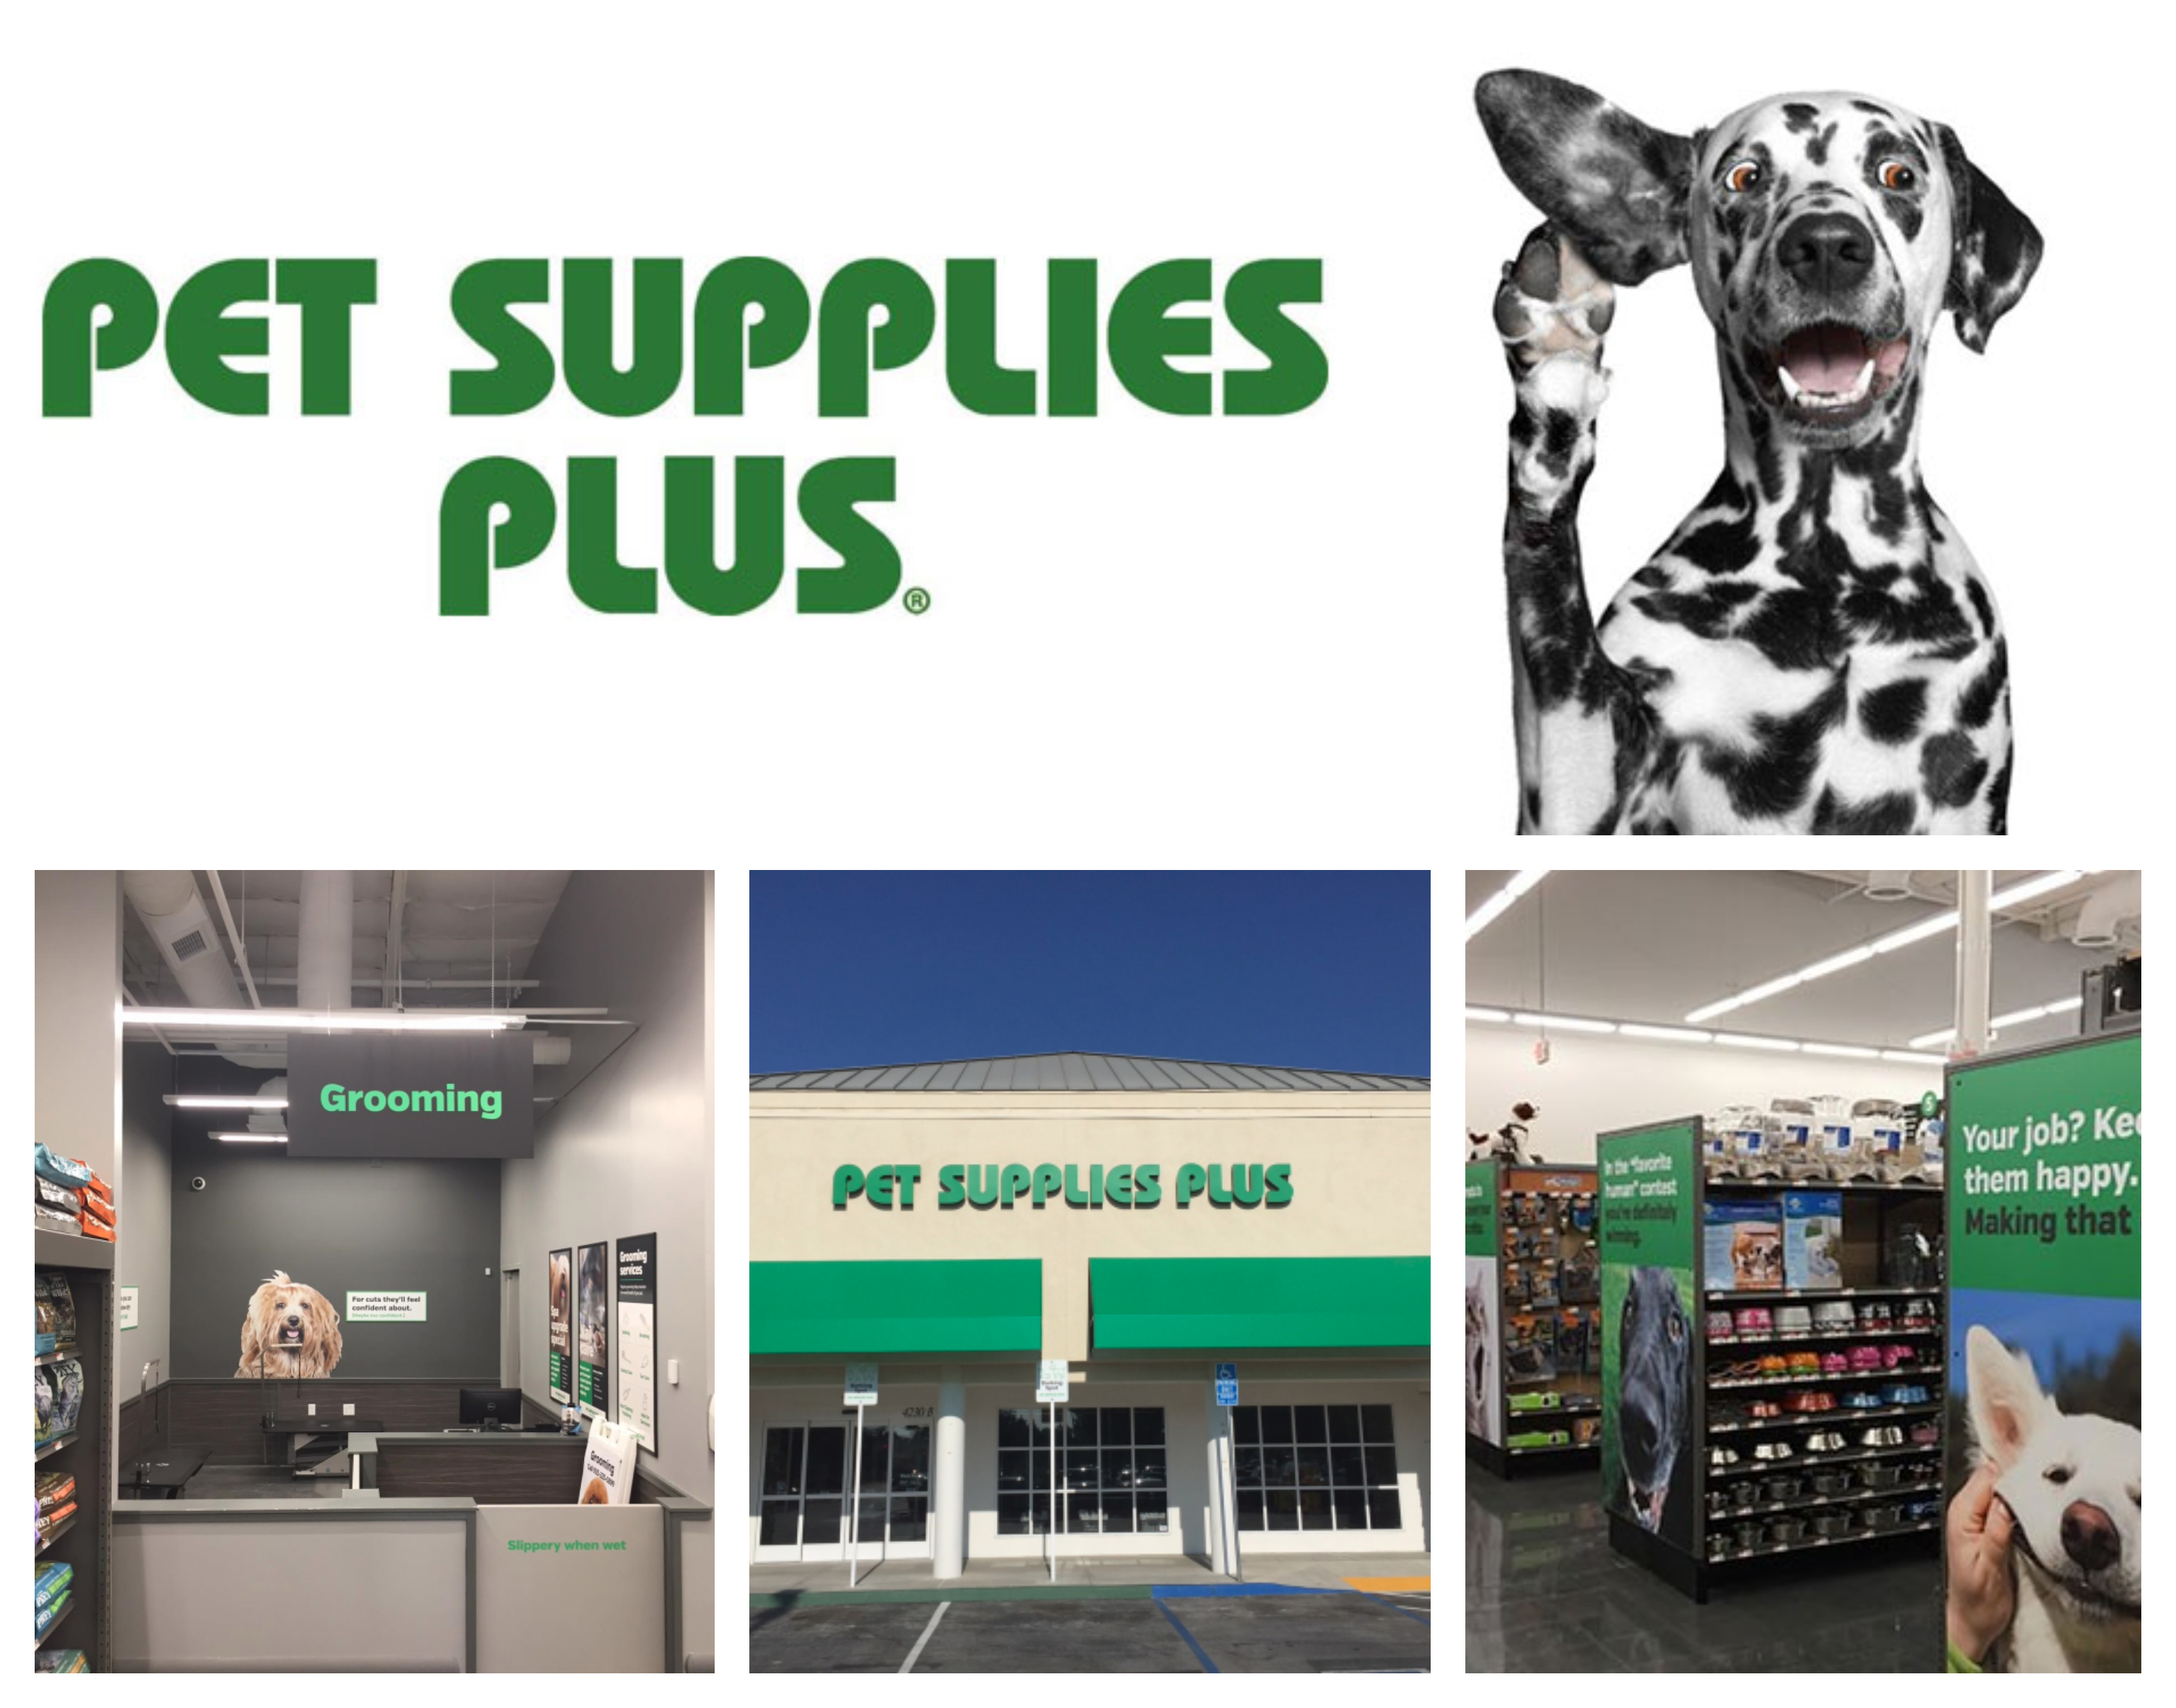 Low-cost pet supplies